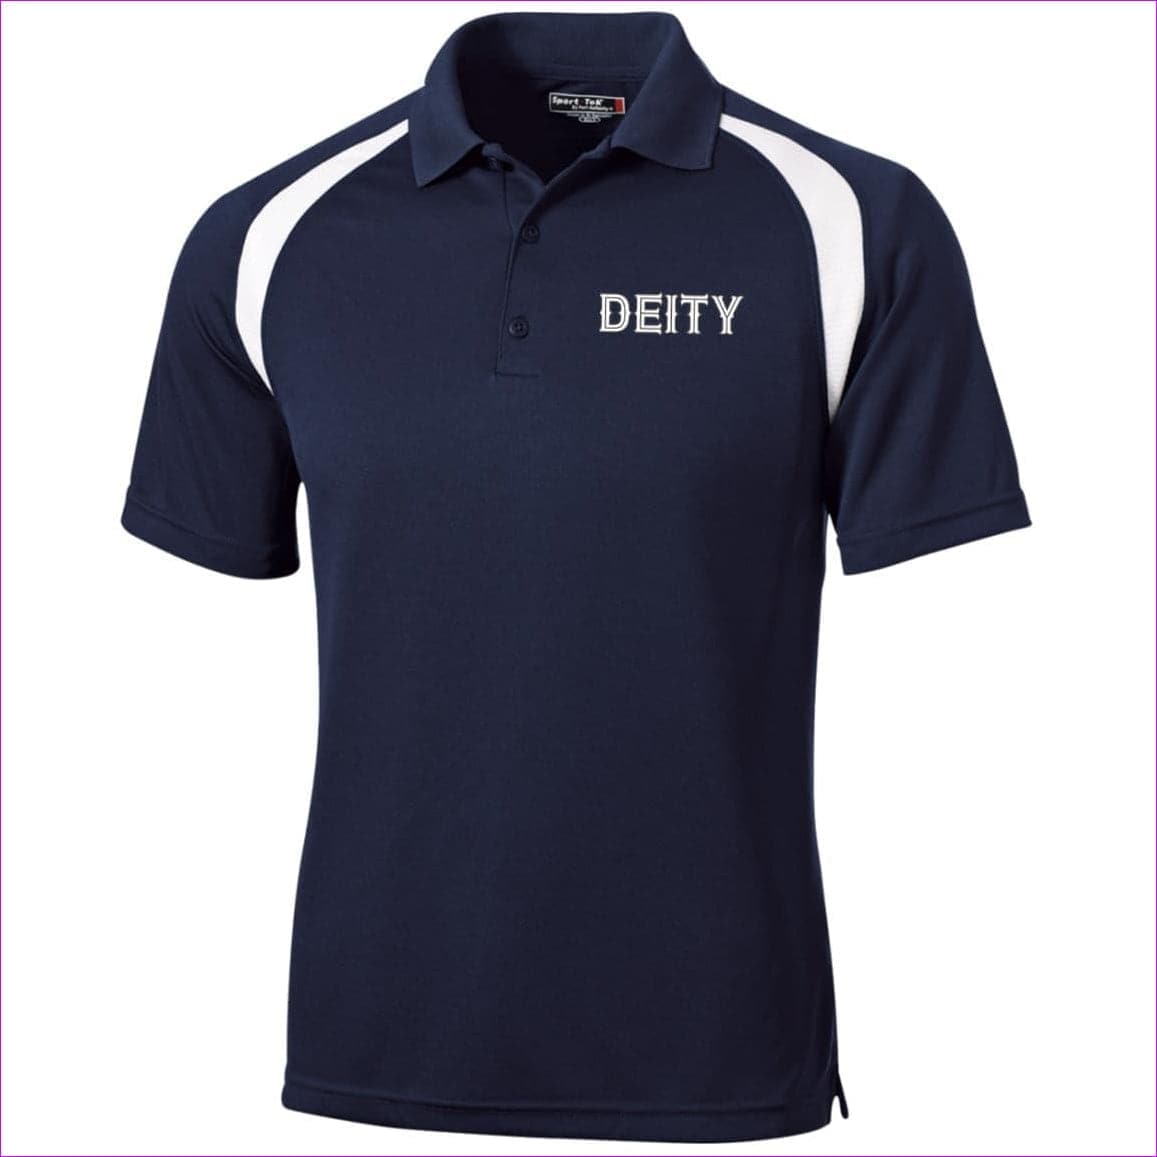 True Navy White - Deity Moisture-Wicking Golf Shirt - Mens Polo Shirts at TFC&H Co.